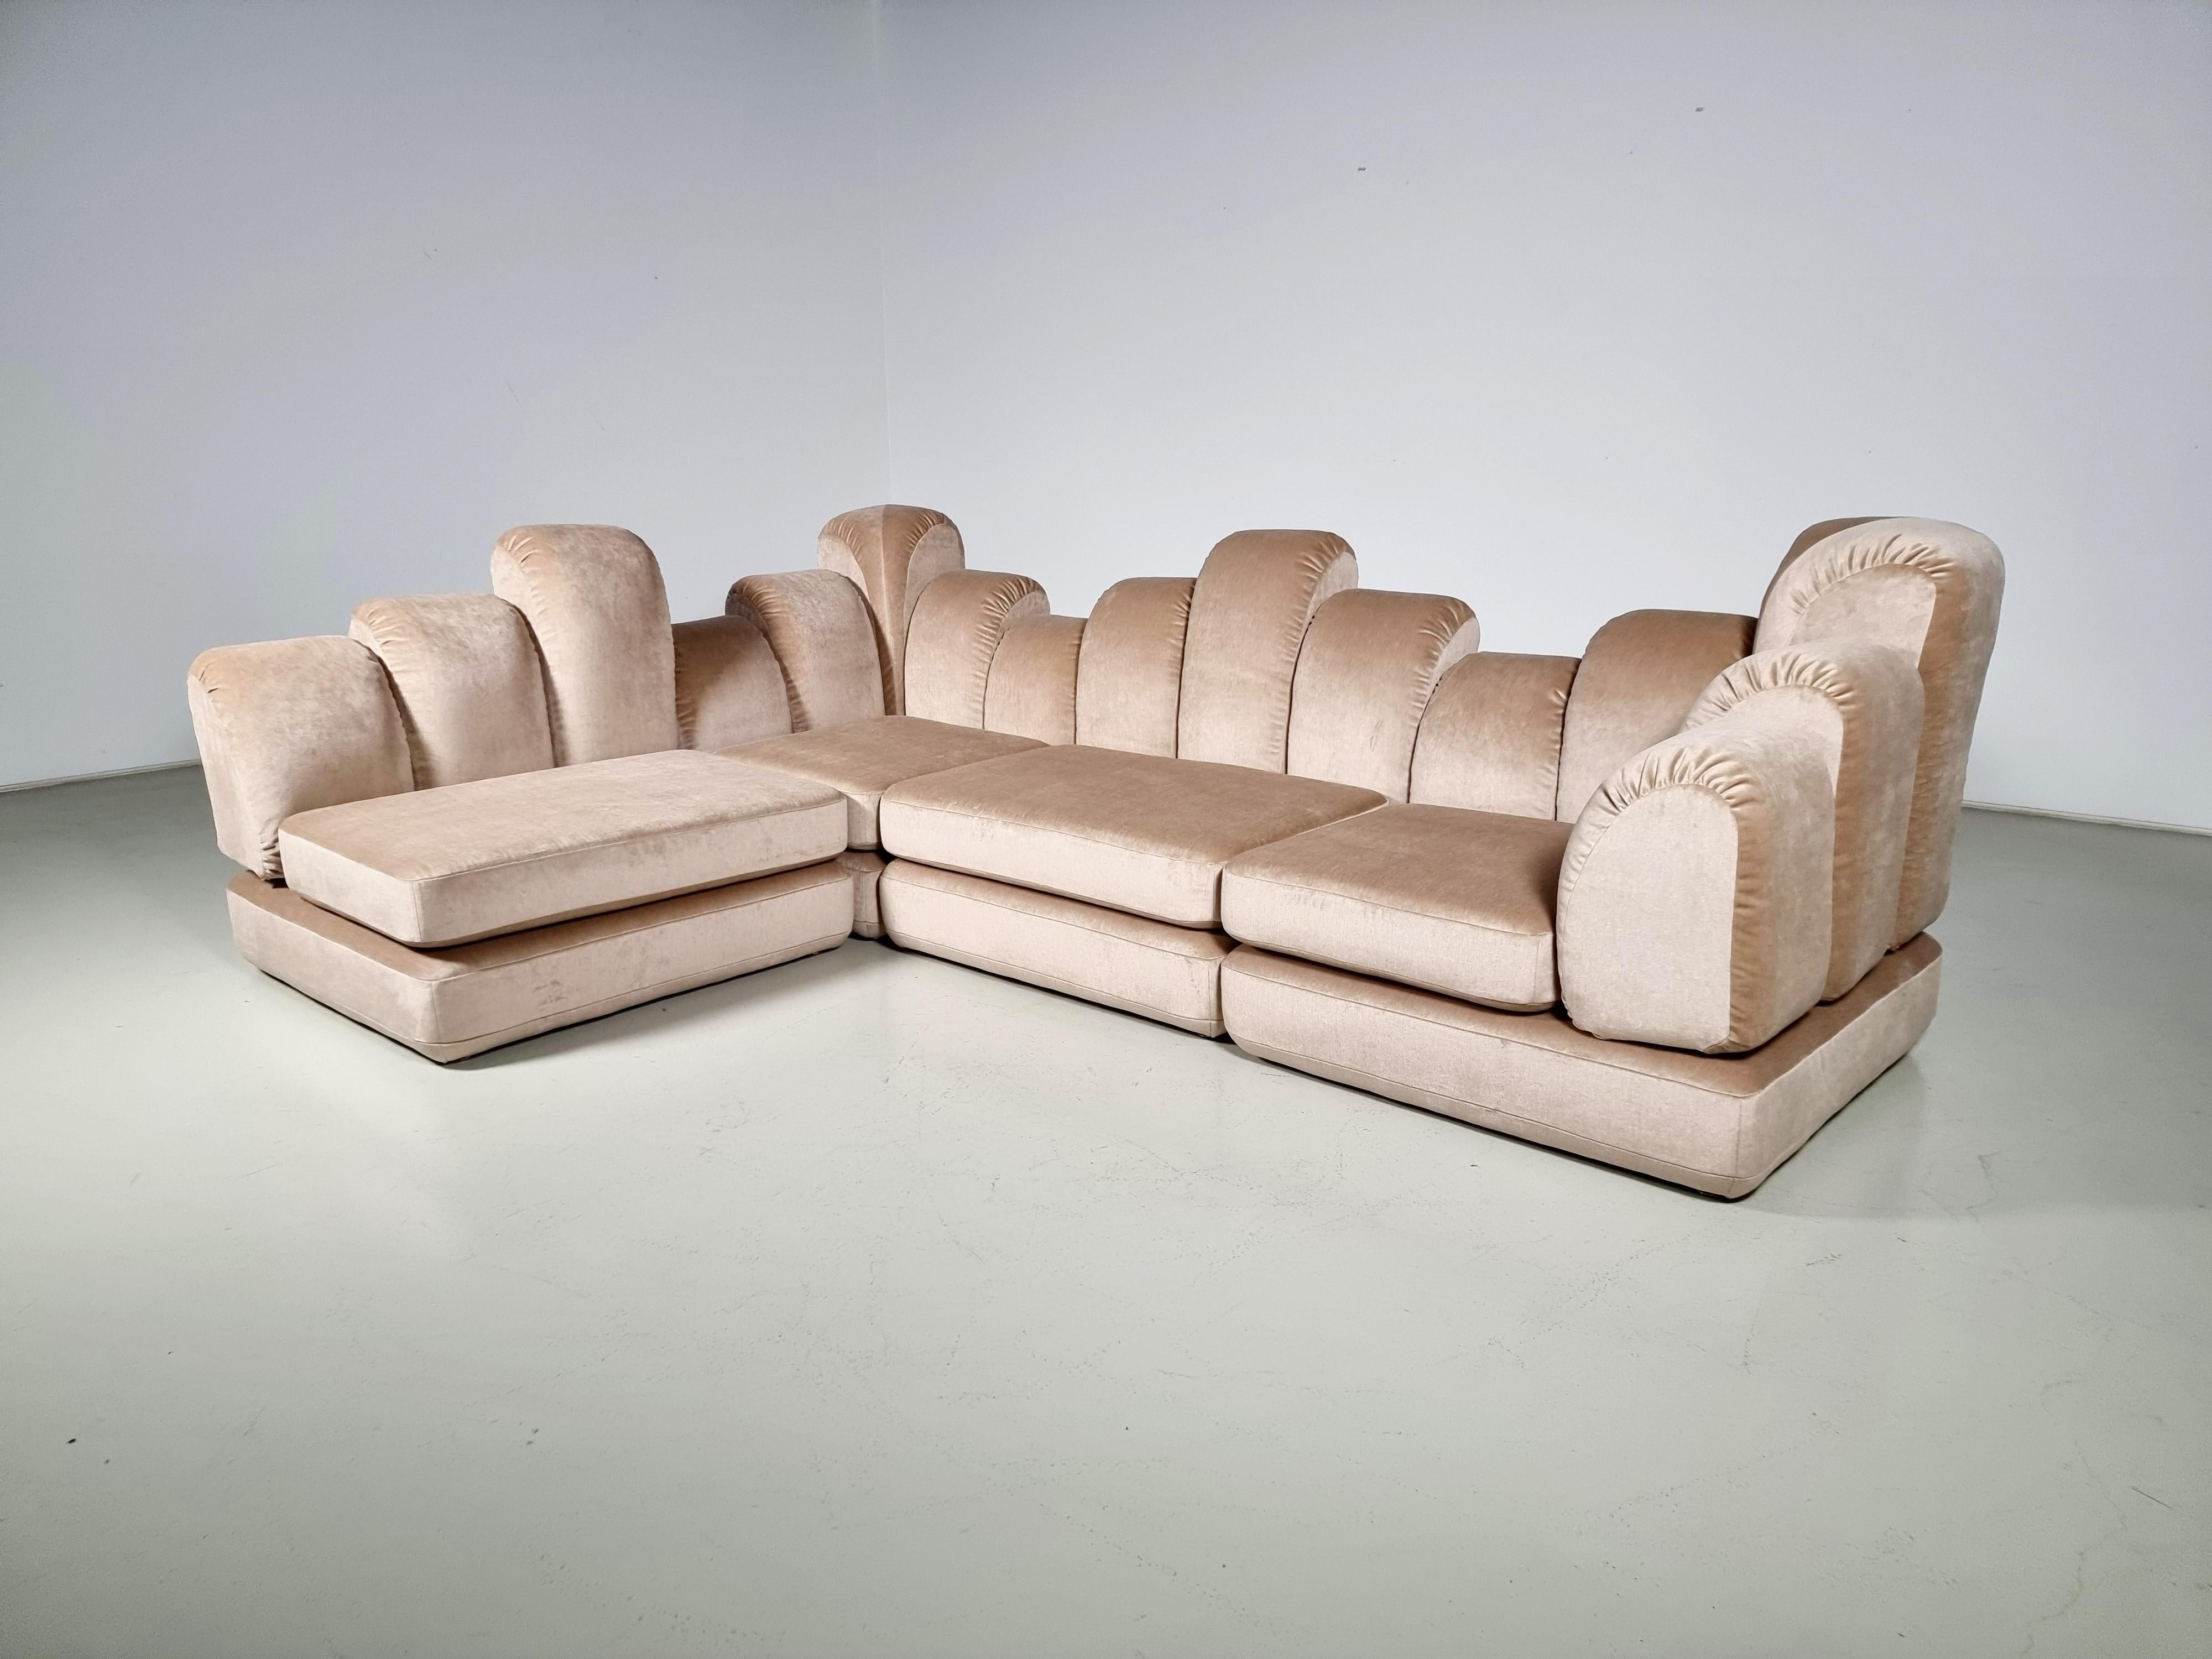 Hans Hopfer 'Dromadaire' Sectional Sofa in mohair wool, Roche Bobois, 1970 For Sale 1